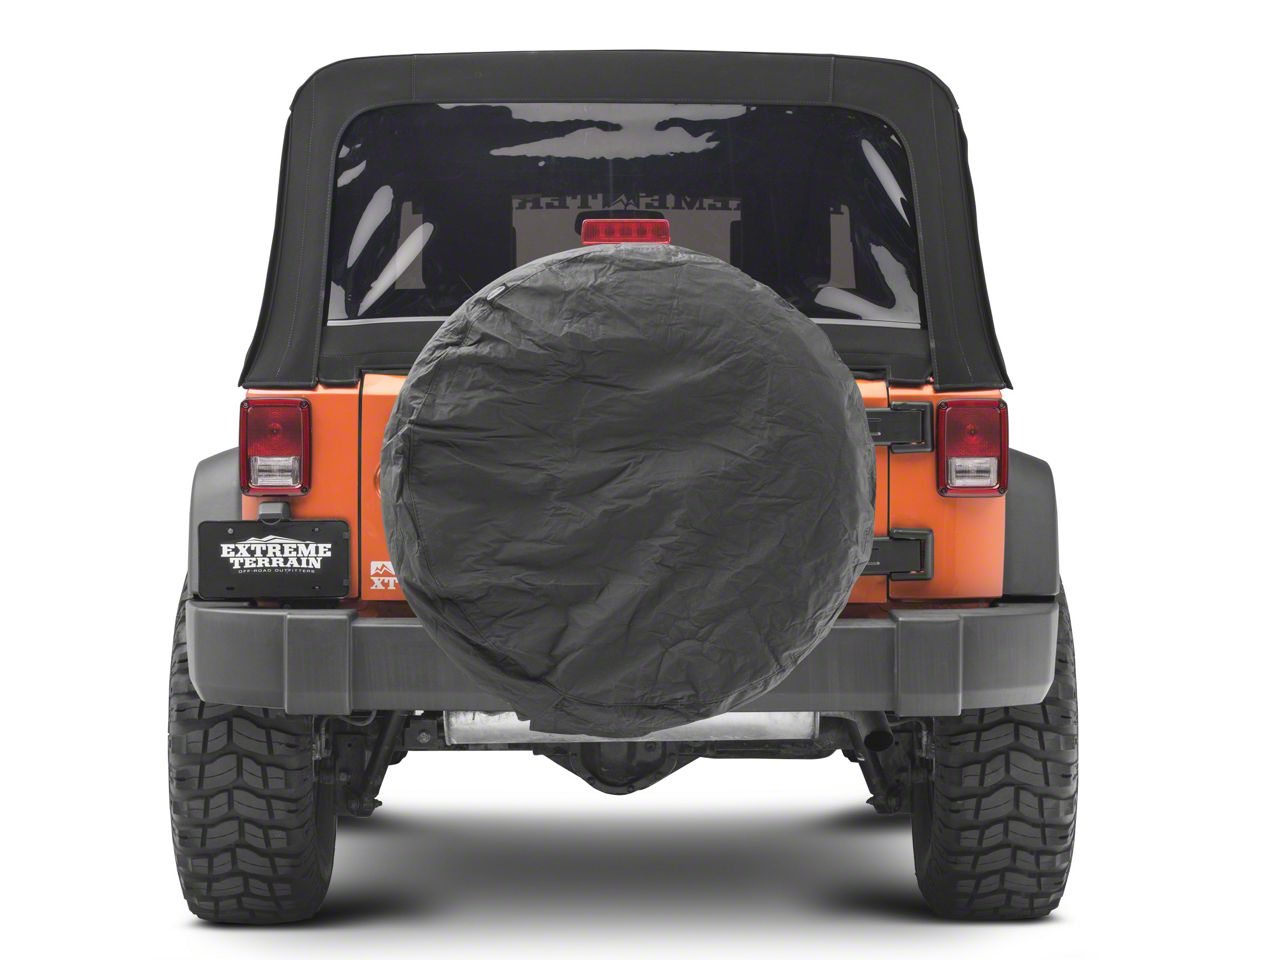 Smittybilt Jeep Wrangler Spare Tire Cover; Black Diamond; 36 to 37-Inch  Tire Cover 773635 (66-18 Jeep CJ5, CJ7, Wrangler YJ, TJ  JK) Free  Shipping